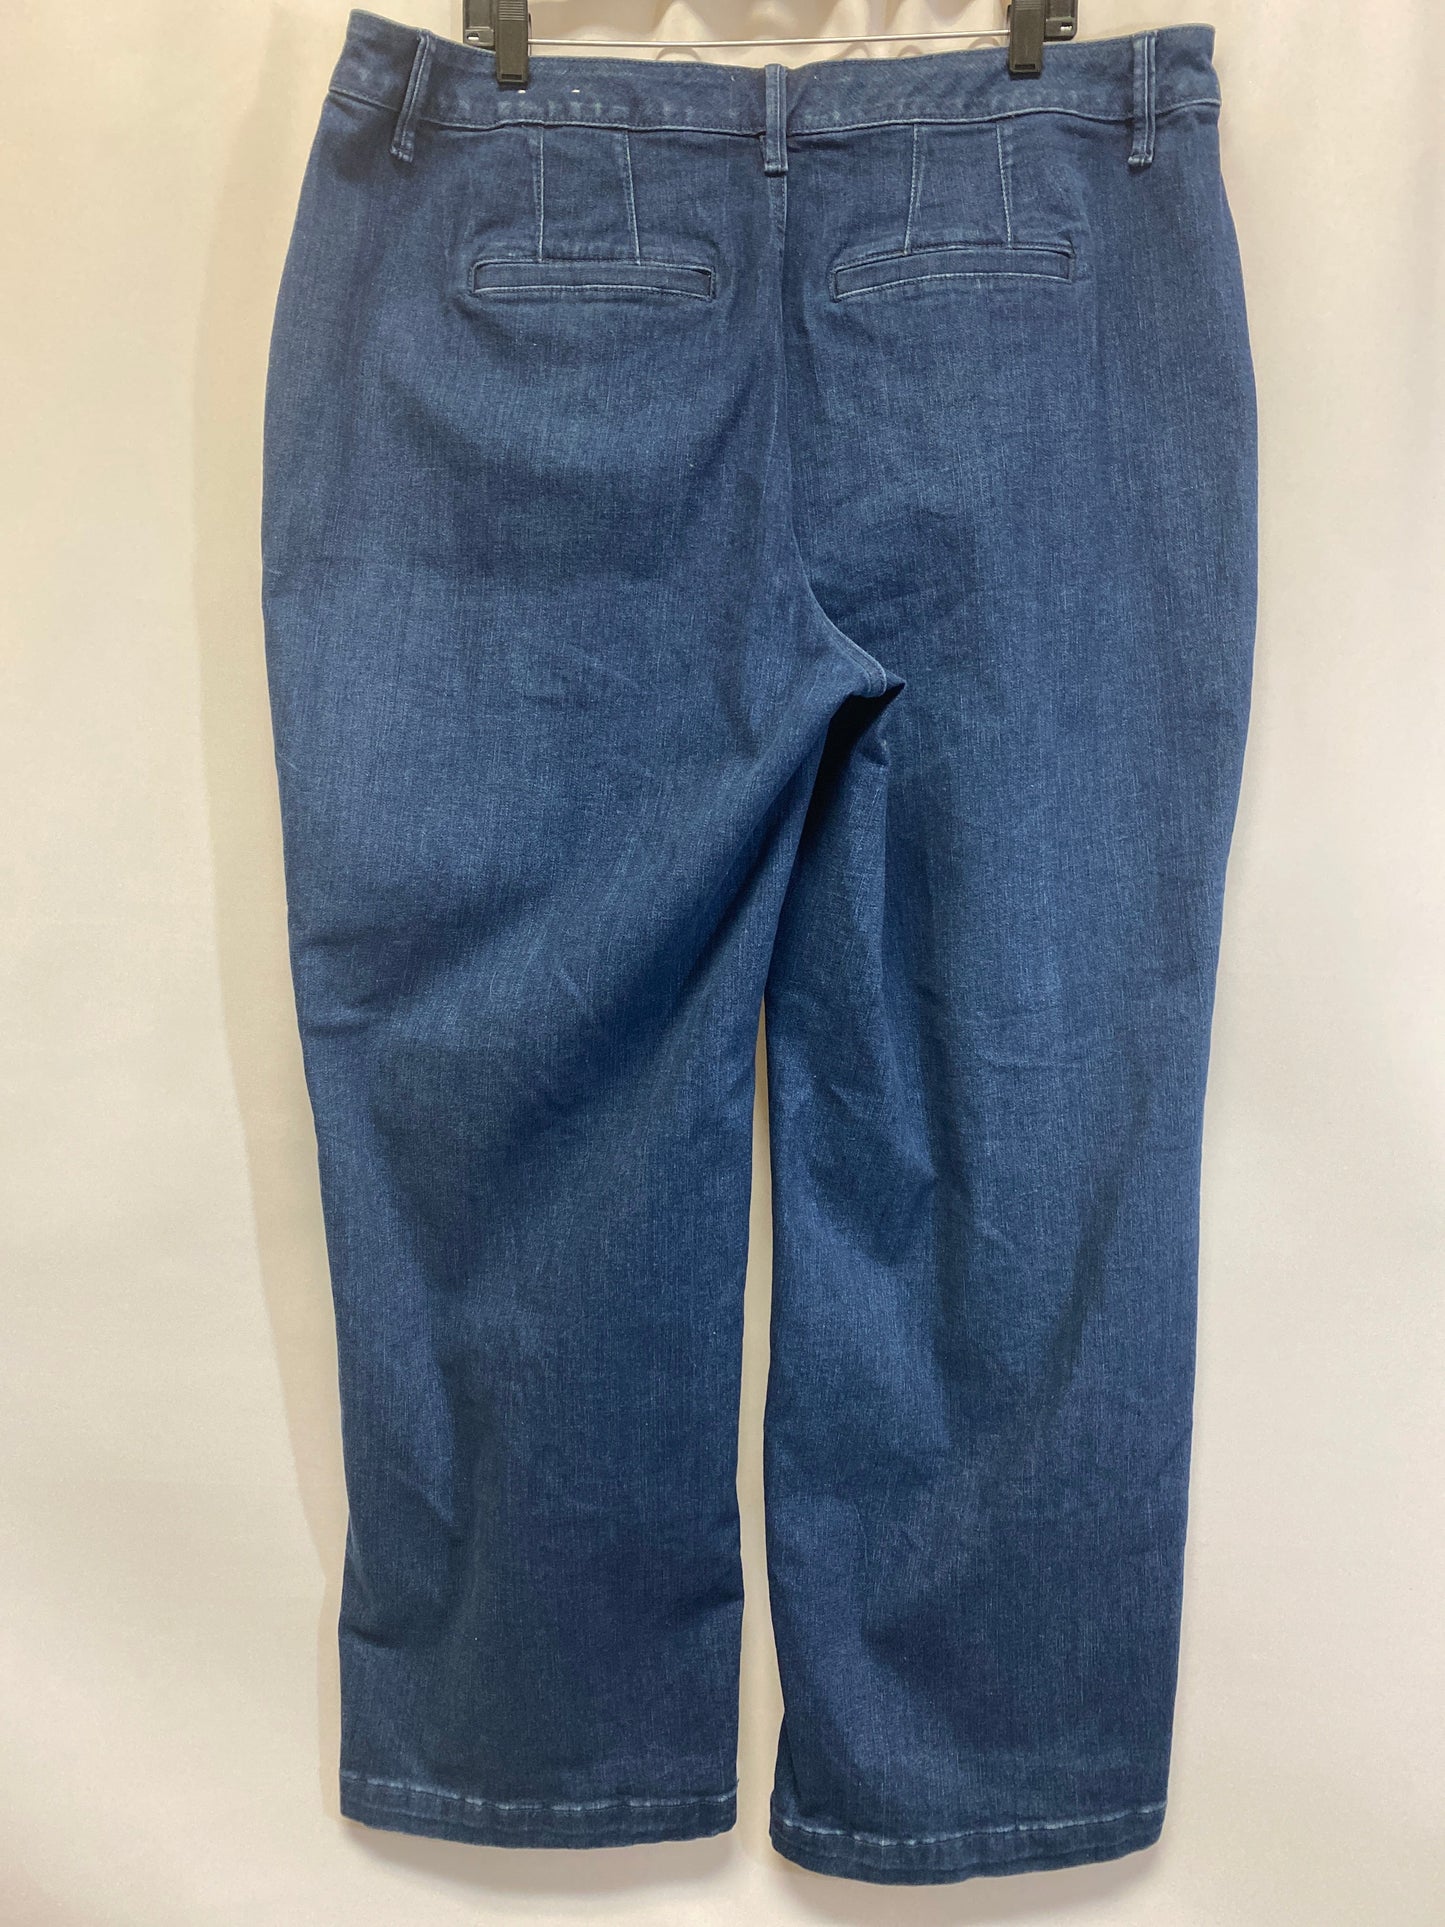 Blue Denim Jeans Straight Lane Bryant, Size 2x